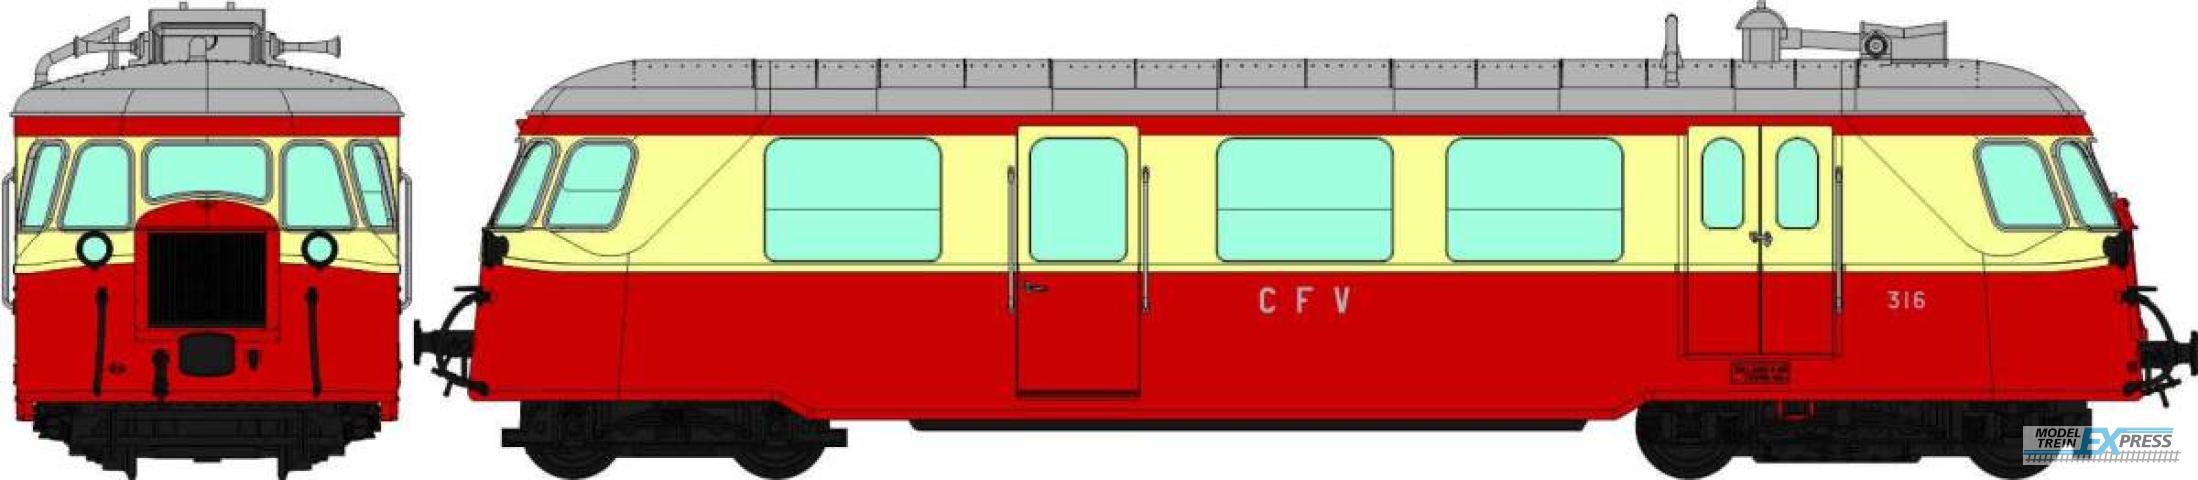 REE models VM-003S BILLARD Railcar CFV Tourist N°316, 2 Lights, Ruby/Cream, Alu Roof Era IV - DCC Sound